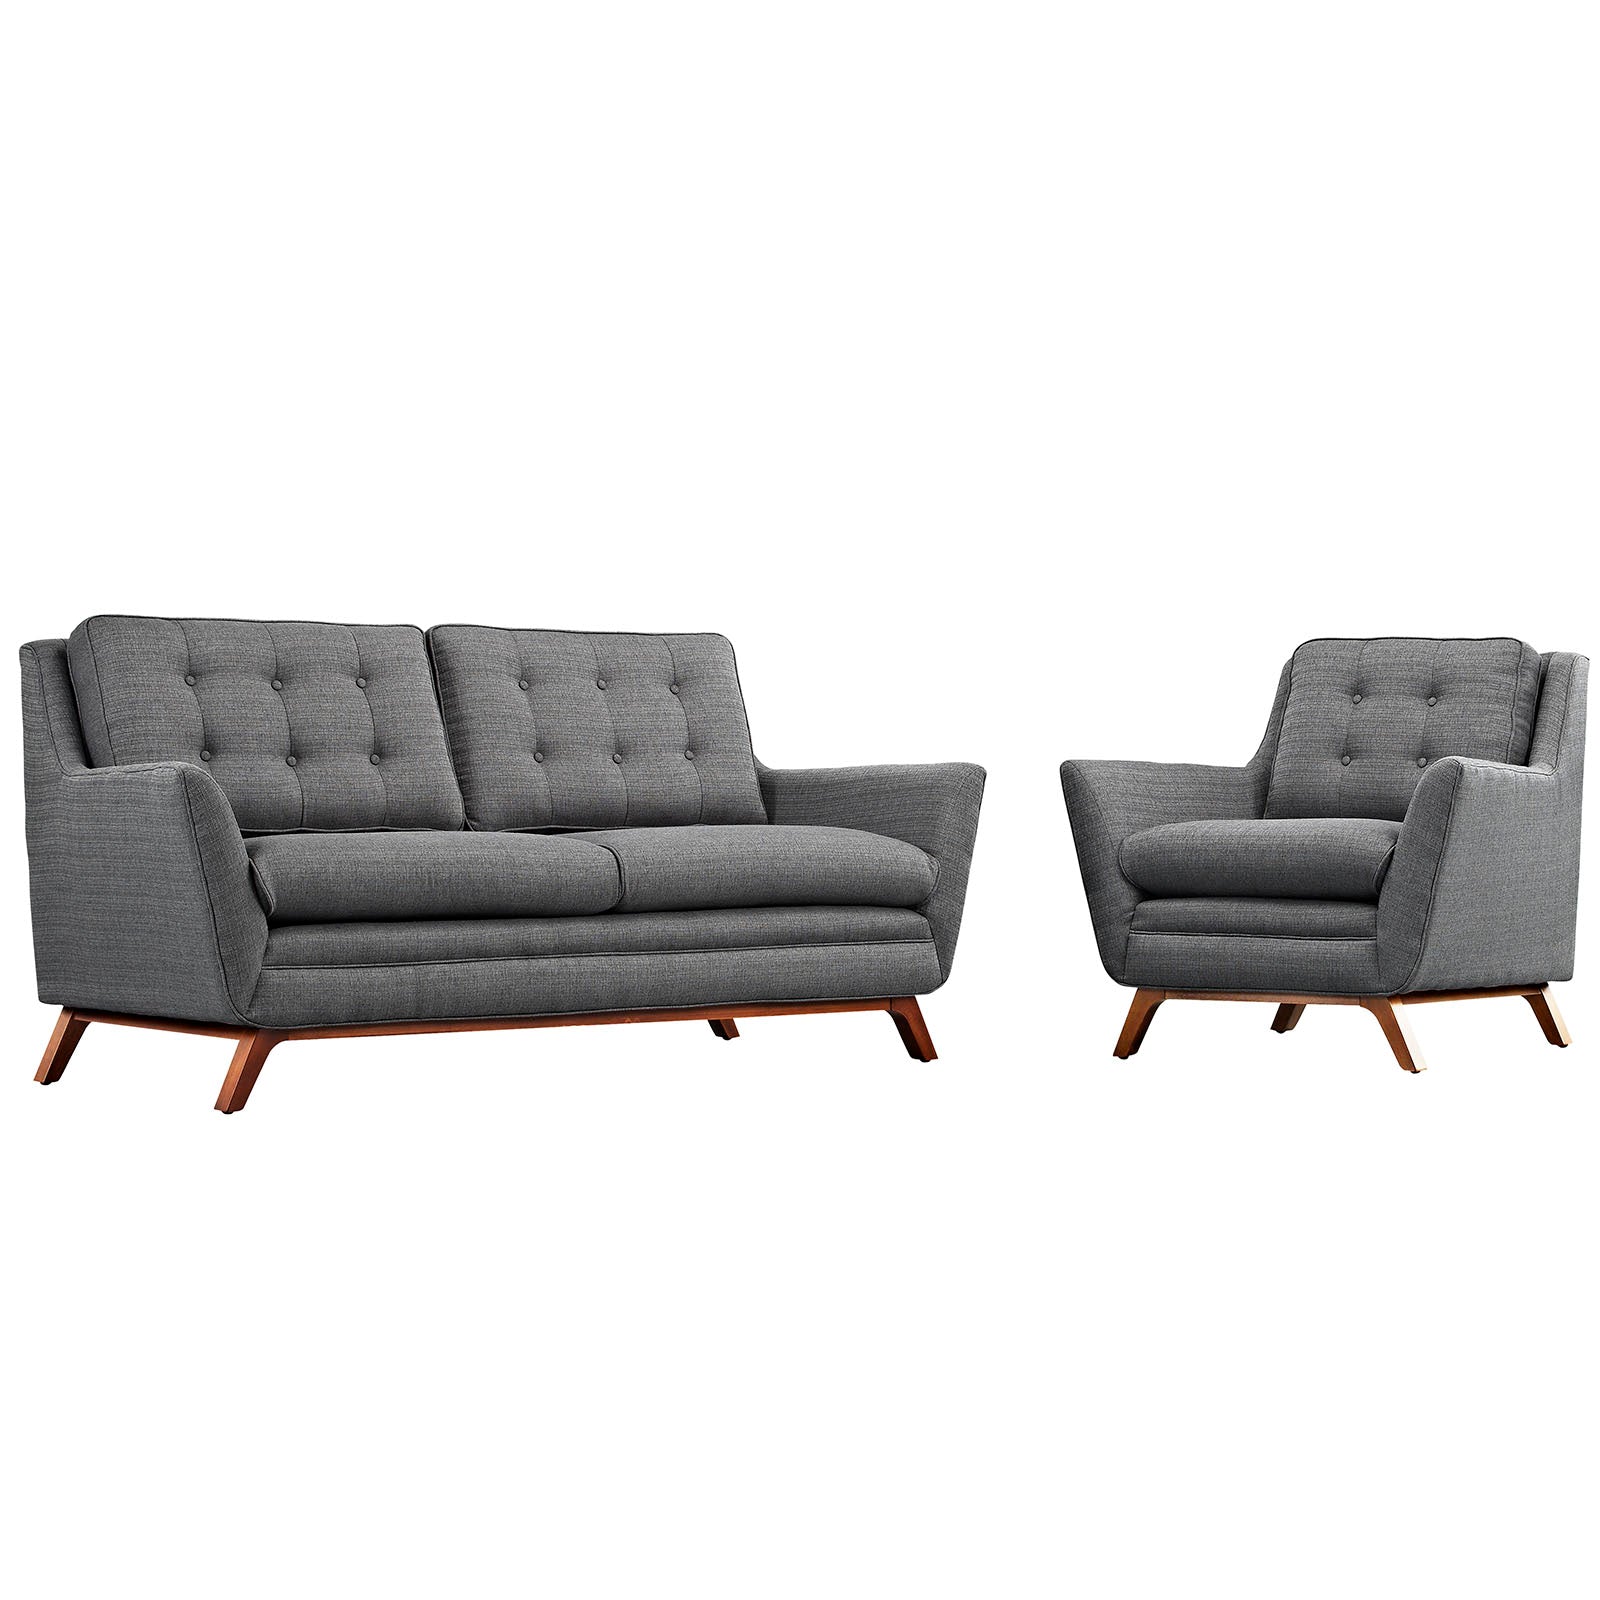 Modway Living Room Sets - Beguile Living Room Sets Upholstered Fabric Set Of 2 Gray